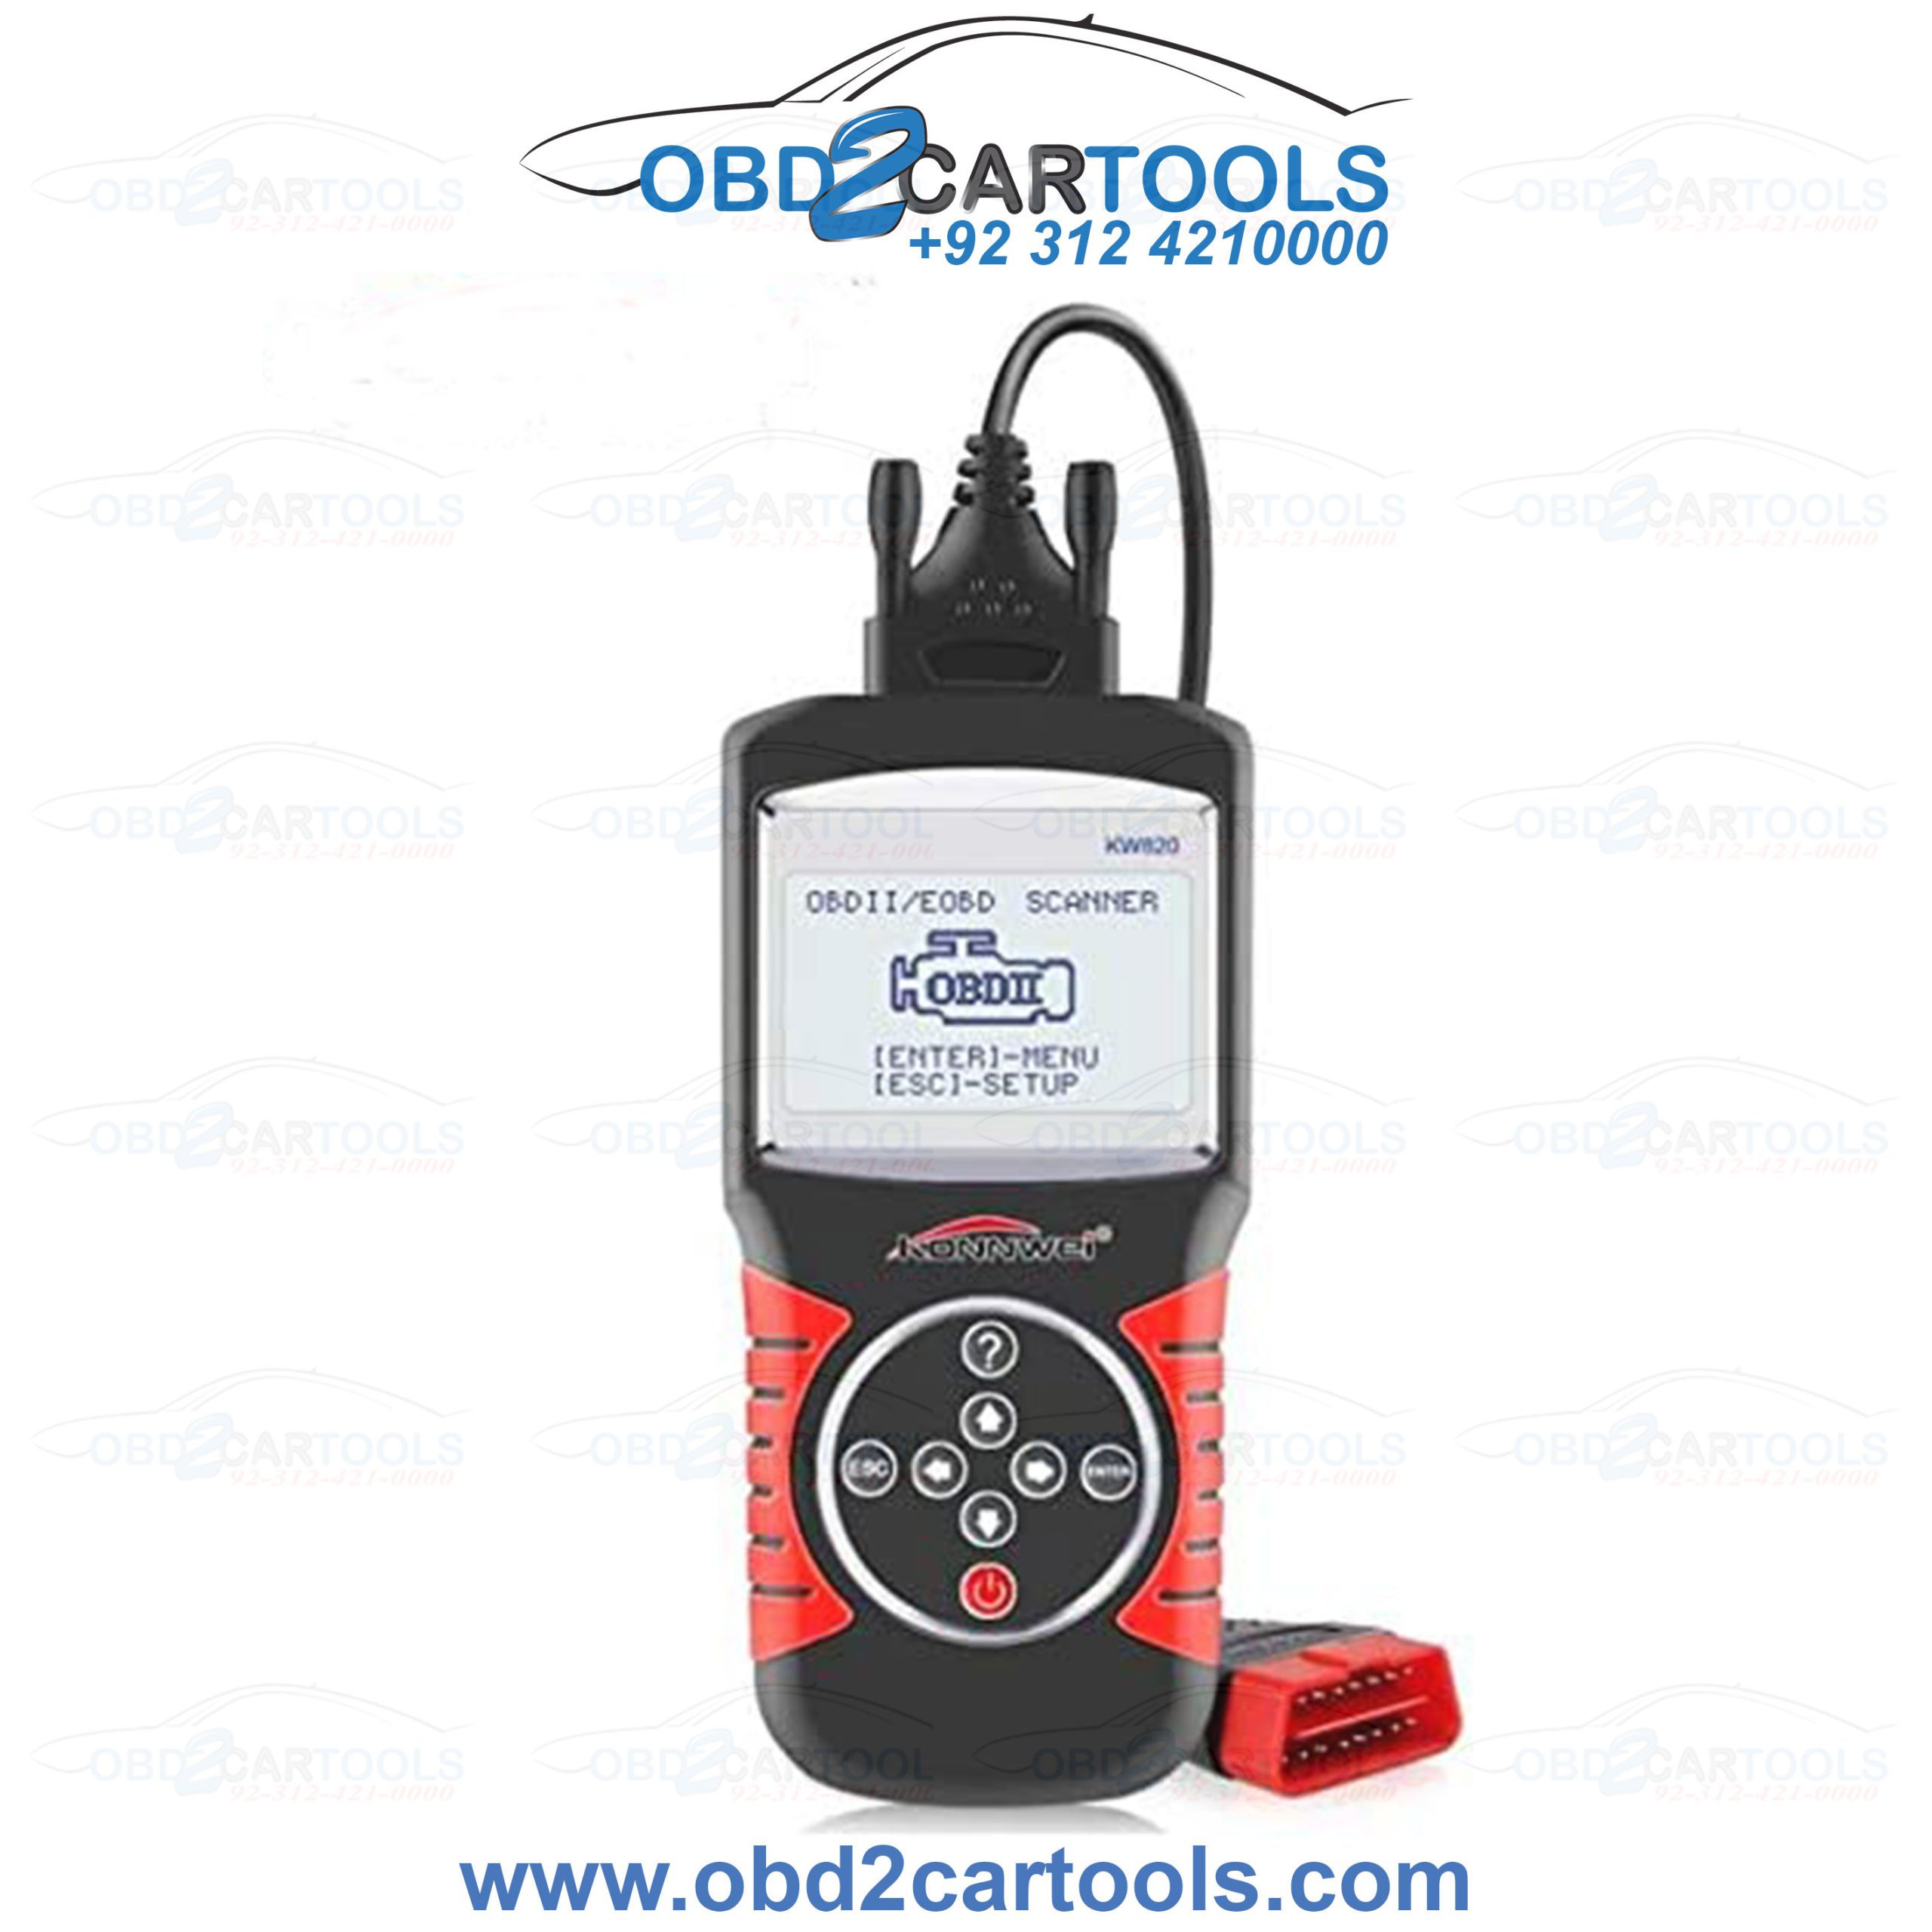 Product image for Konweii KW820 OBDII/EOBD Code Reader supports all nine OBDII test modes on all OBDII EOBD vehicles Car Scanner